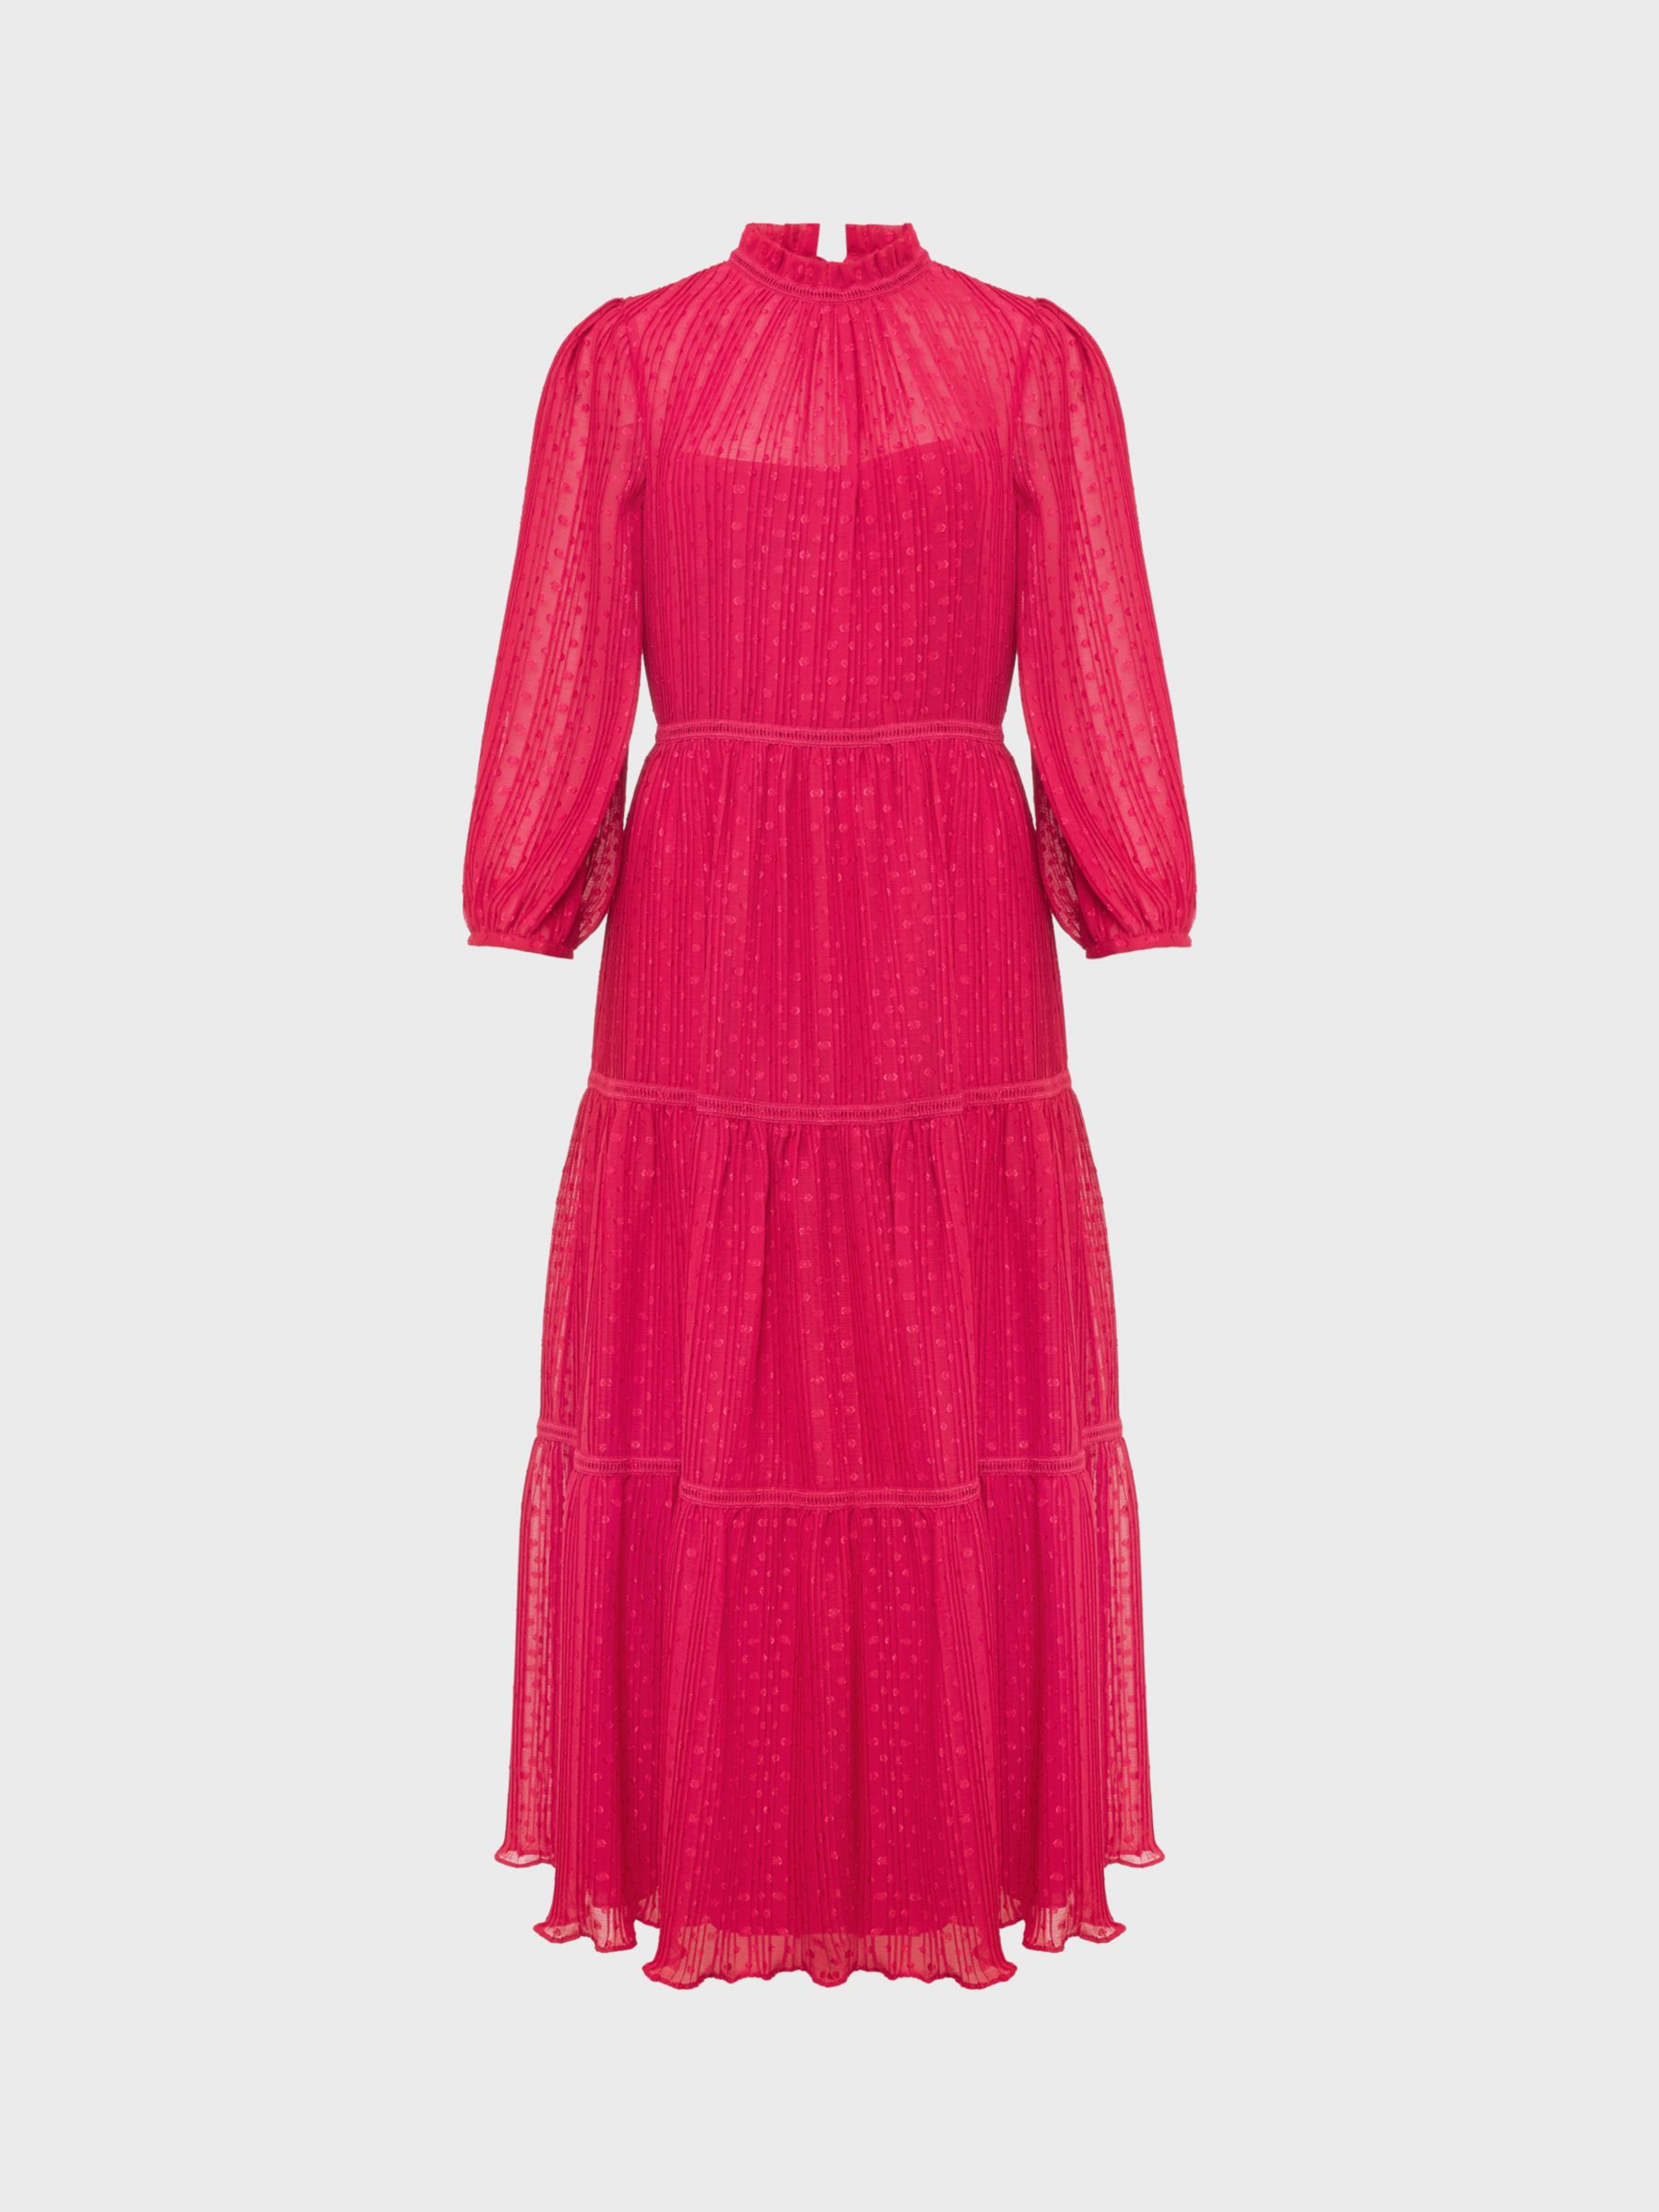 Hobbs Colette Textured Midi Dress, Cerise Pink at John Lewis & Partners